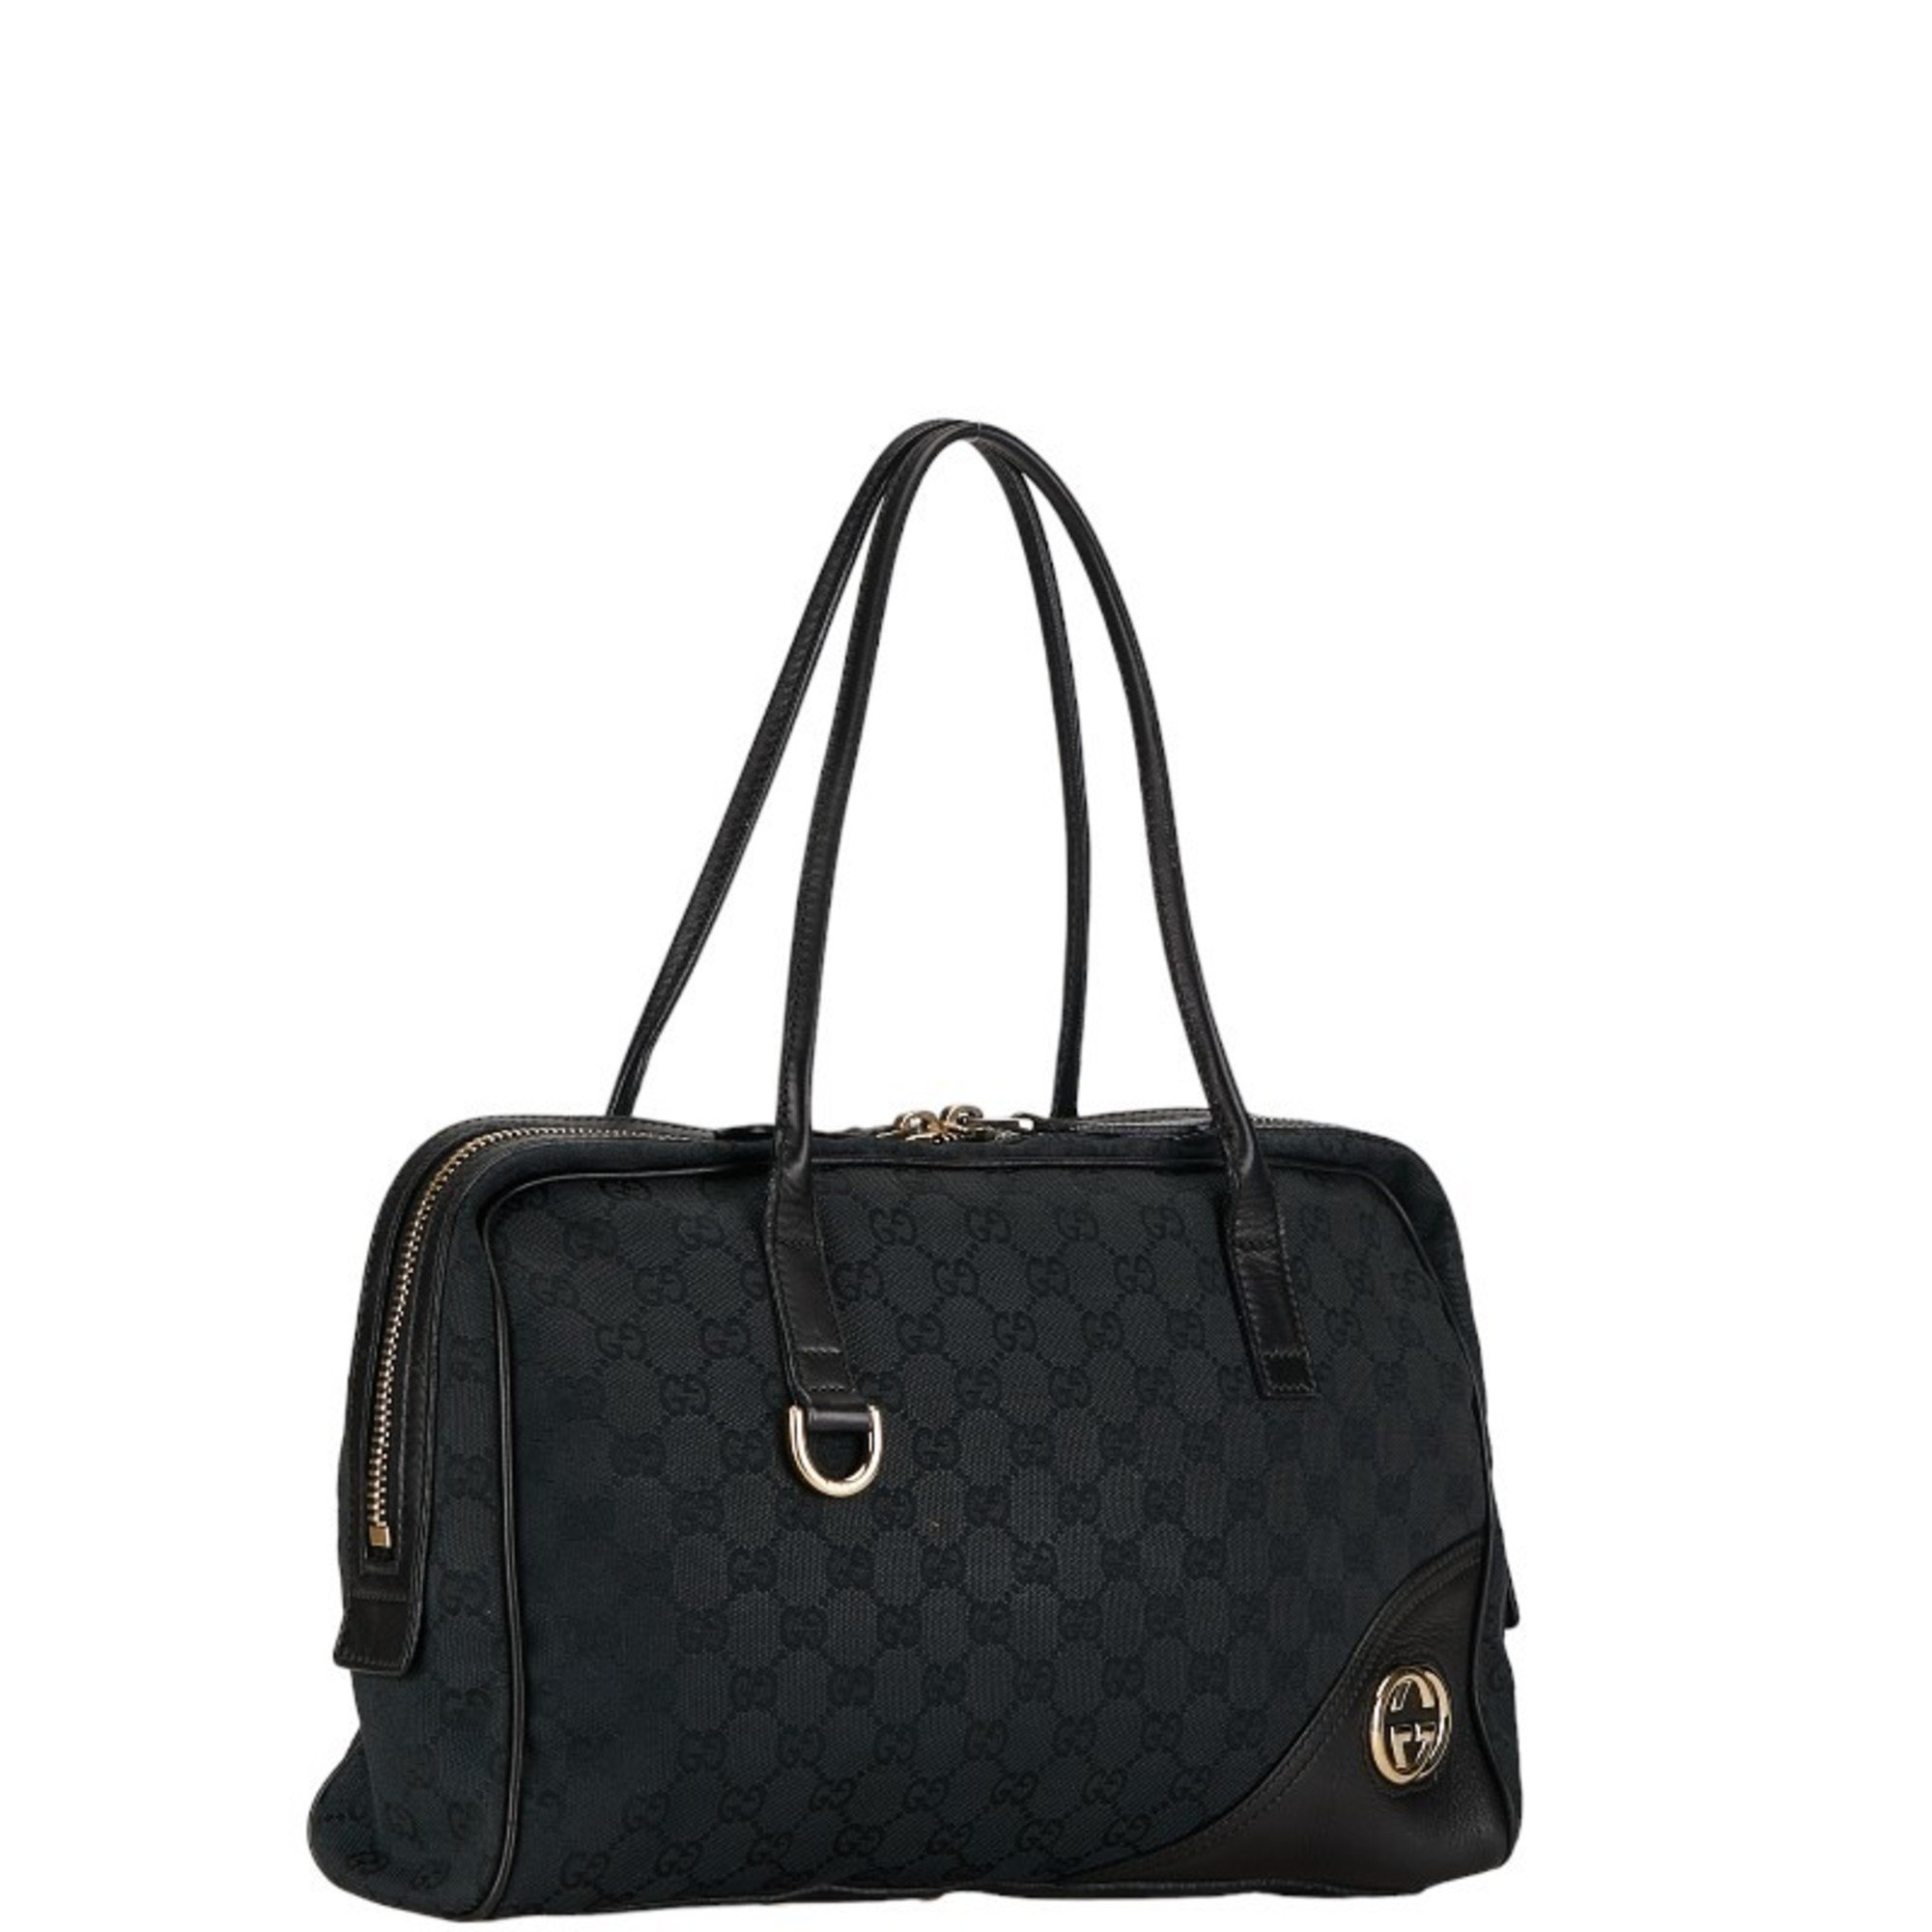 Gucci GG Canvas Interlocking G Handbag 169971 Black Leather Women's GUCCI